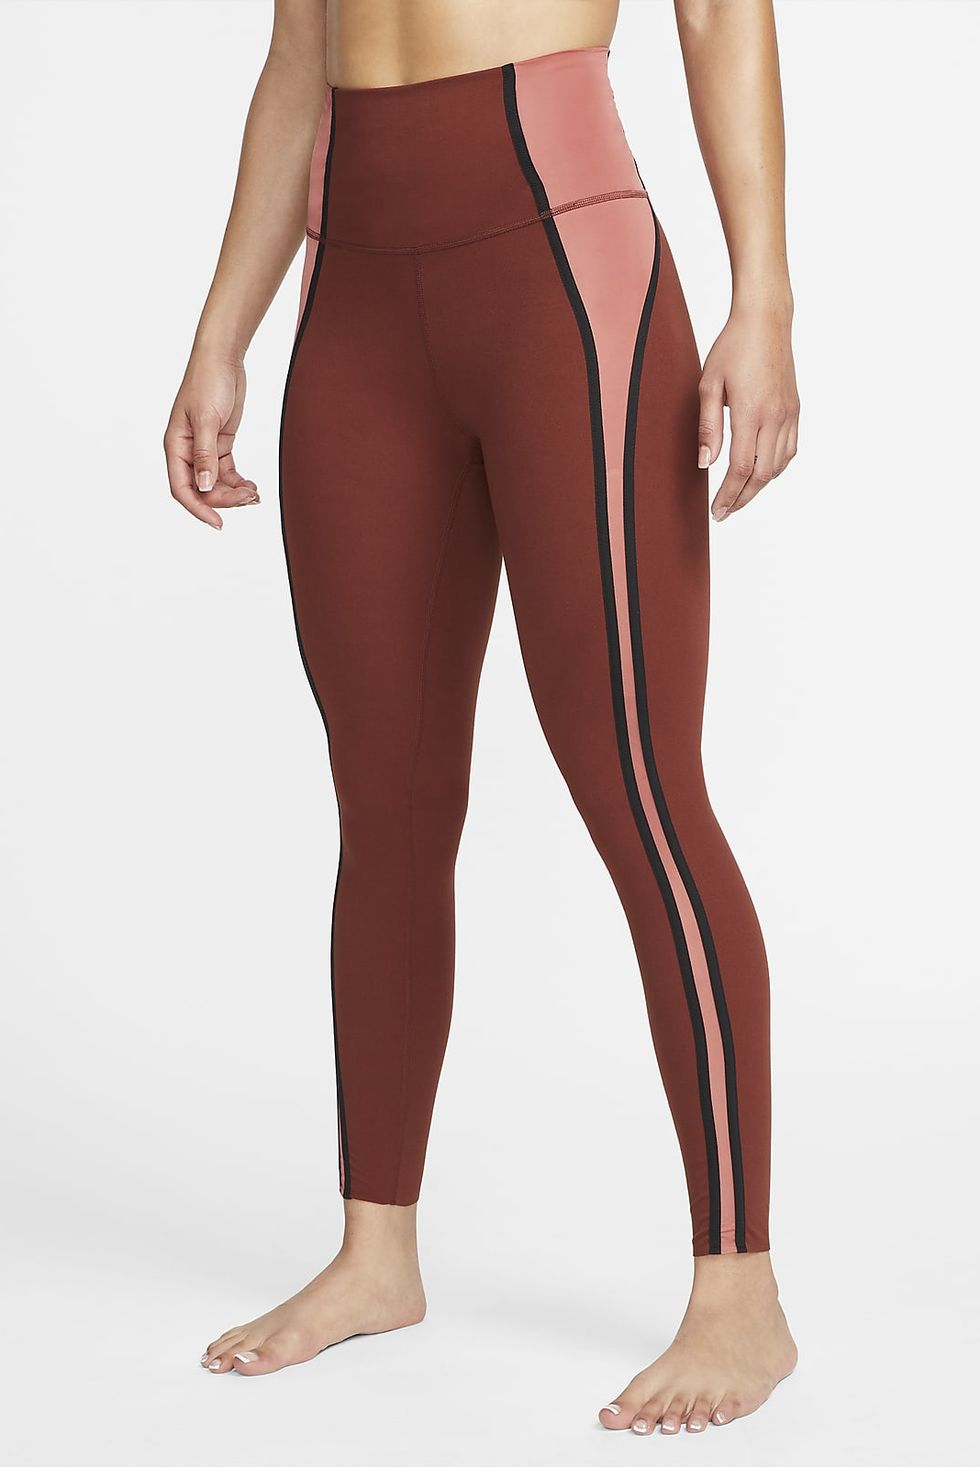 Nike Yoga Dri-FIT high waist 7/8 leggings in khaki